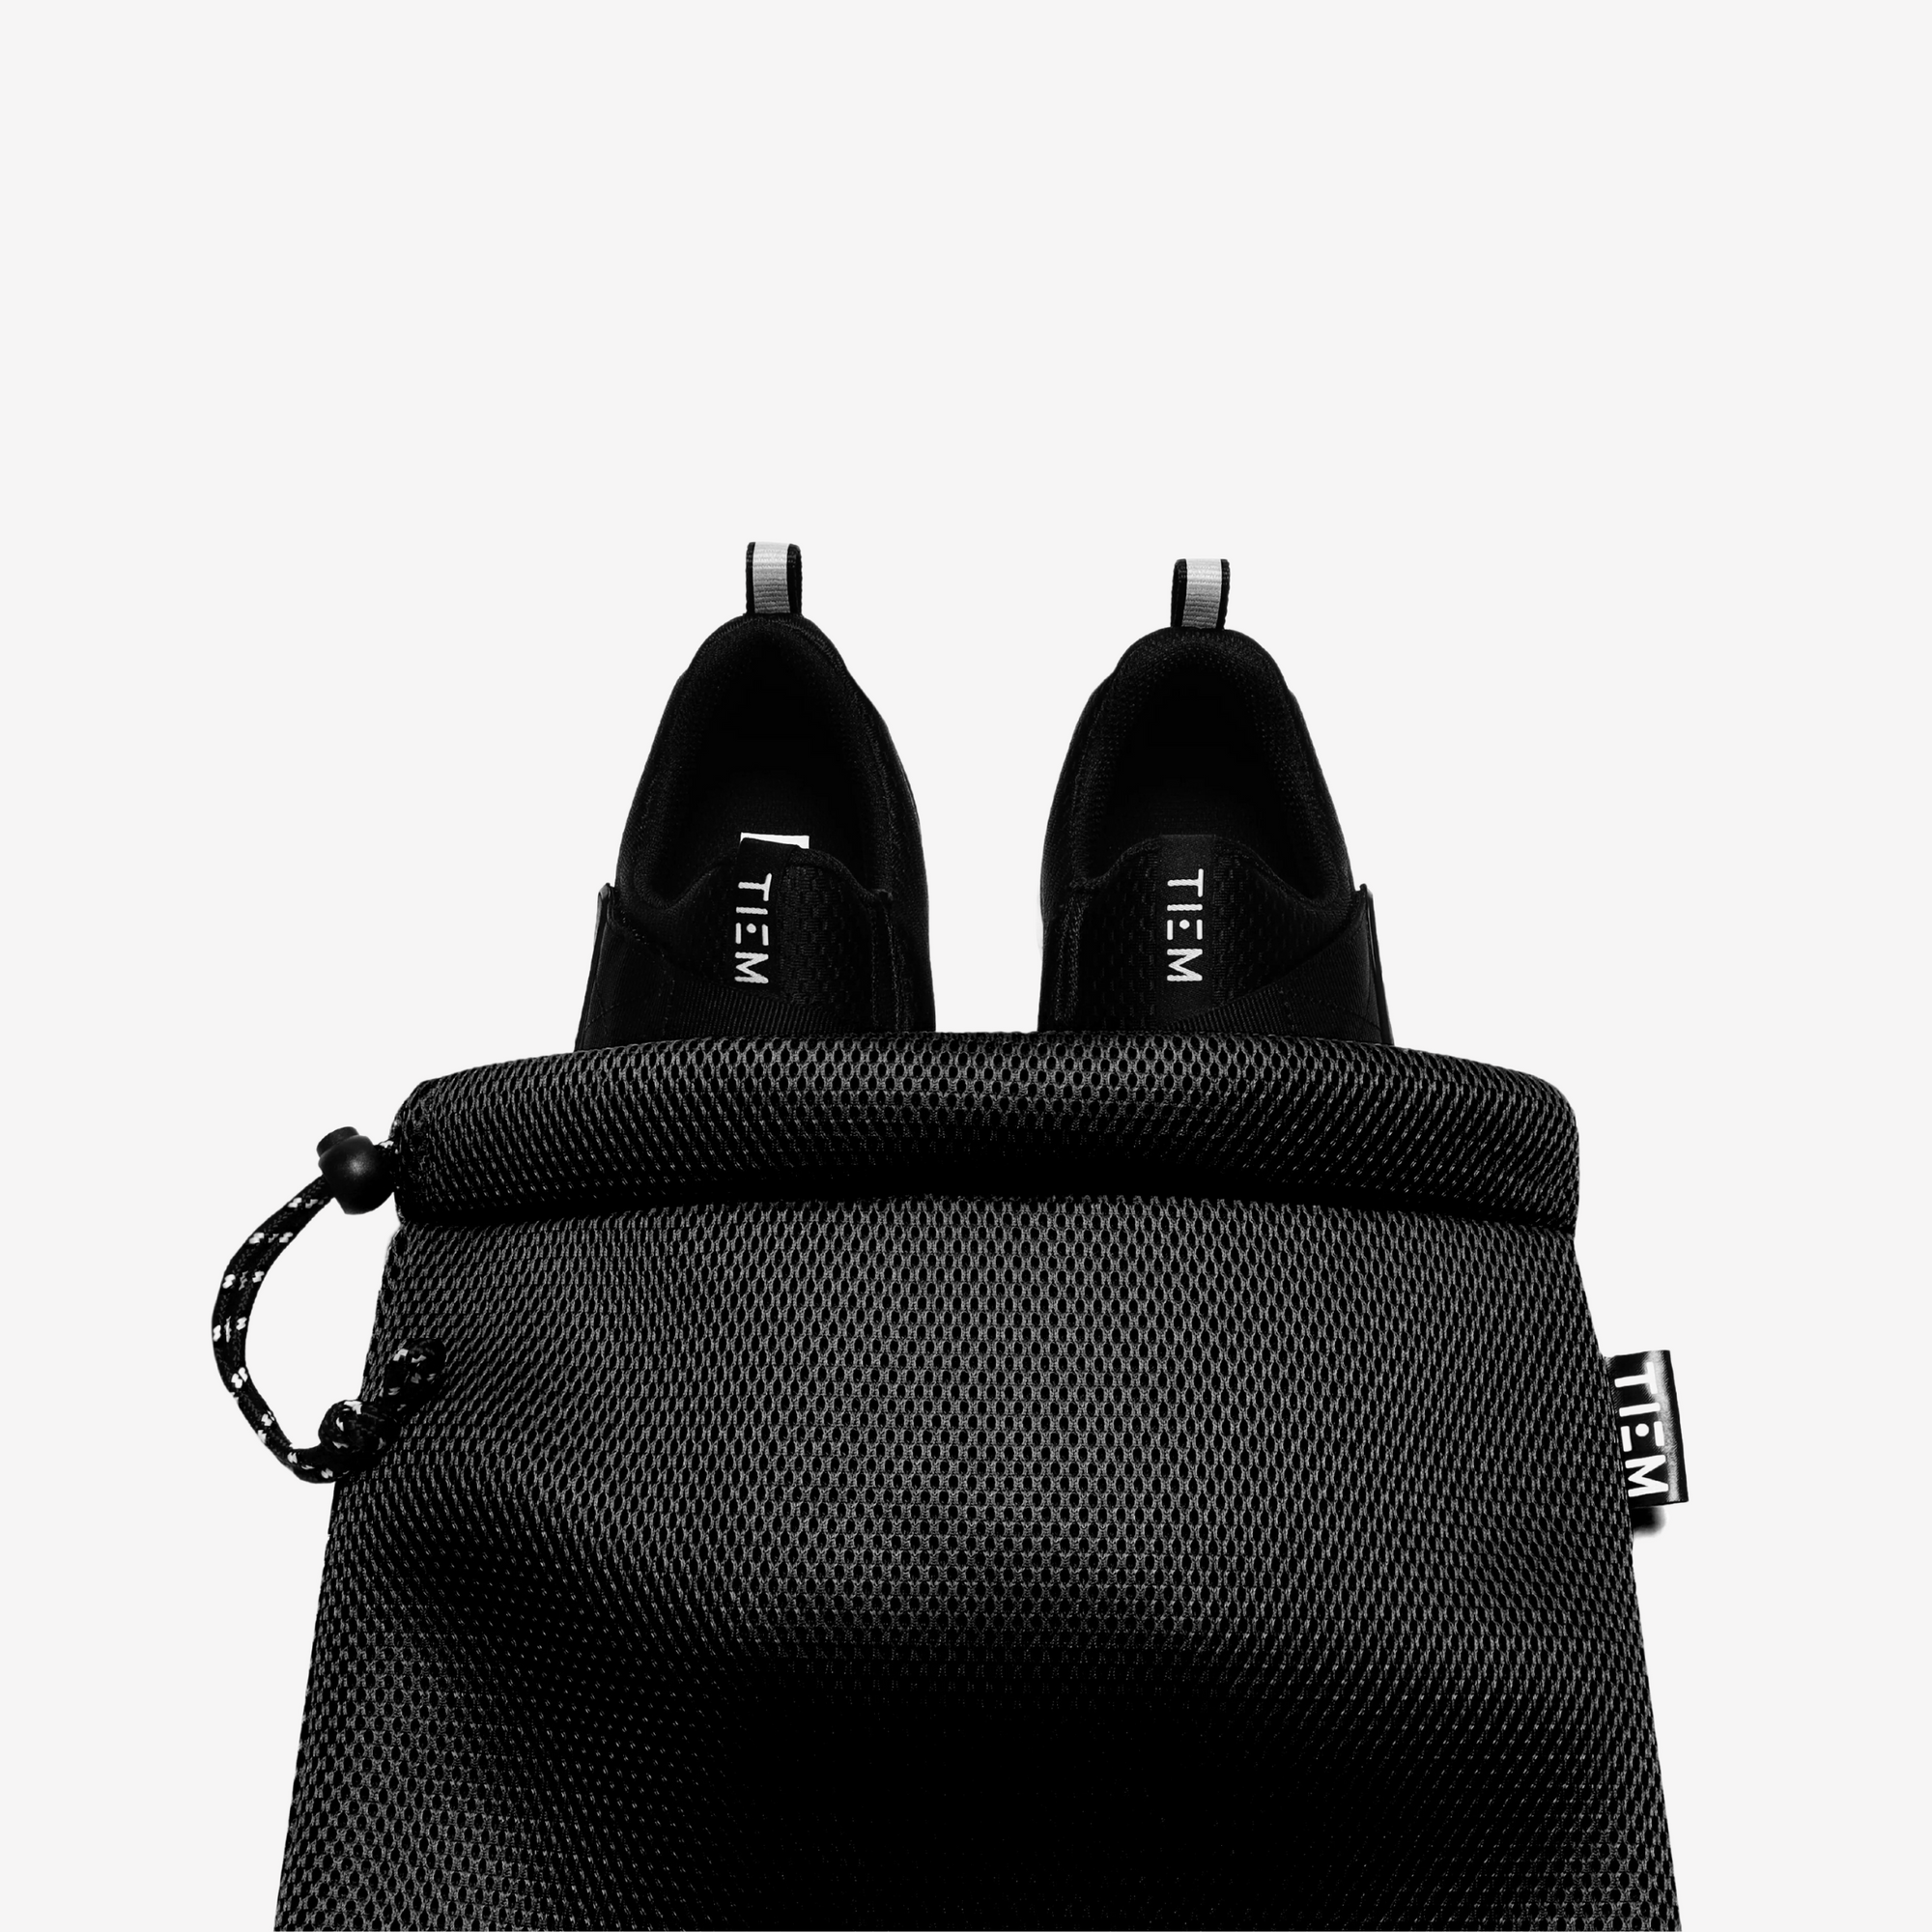 Shoe Bag - Black